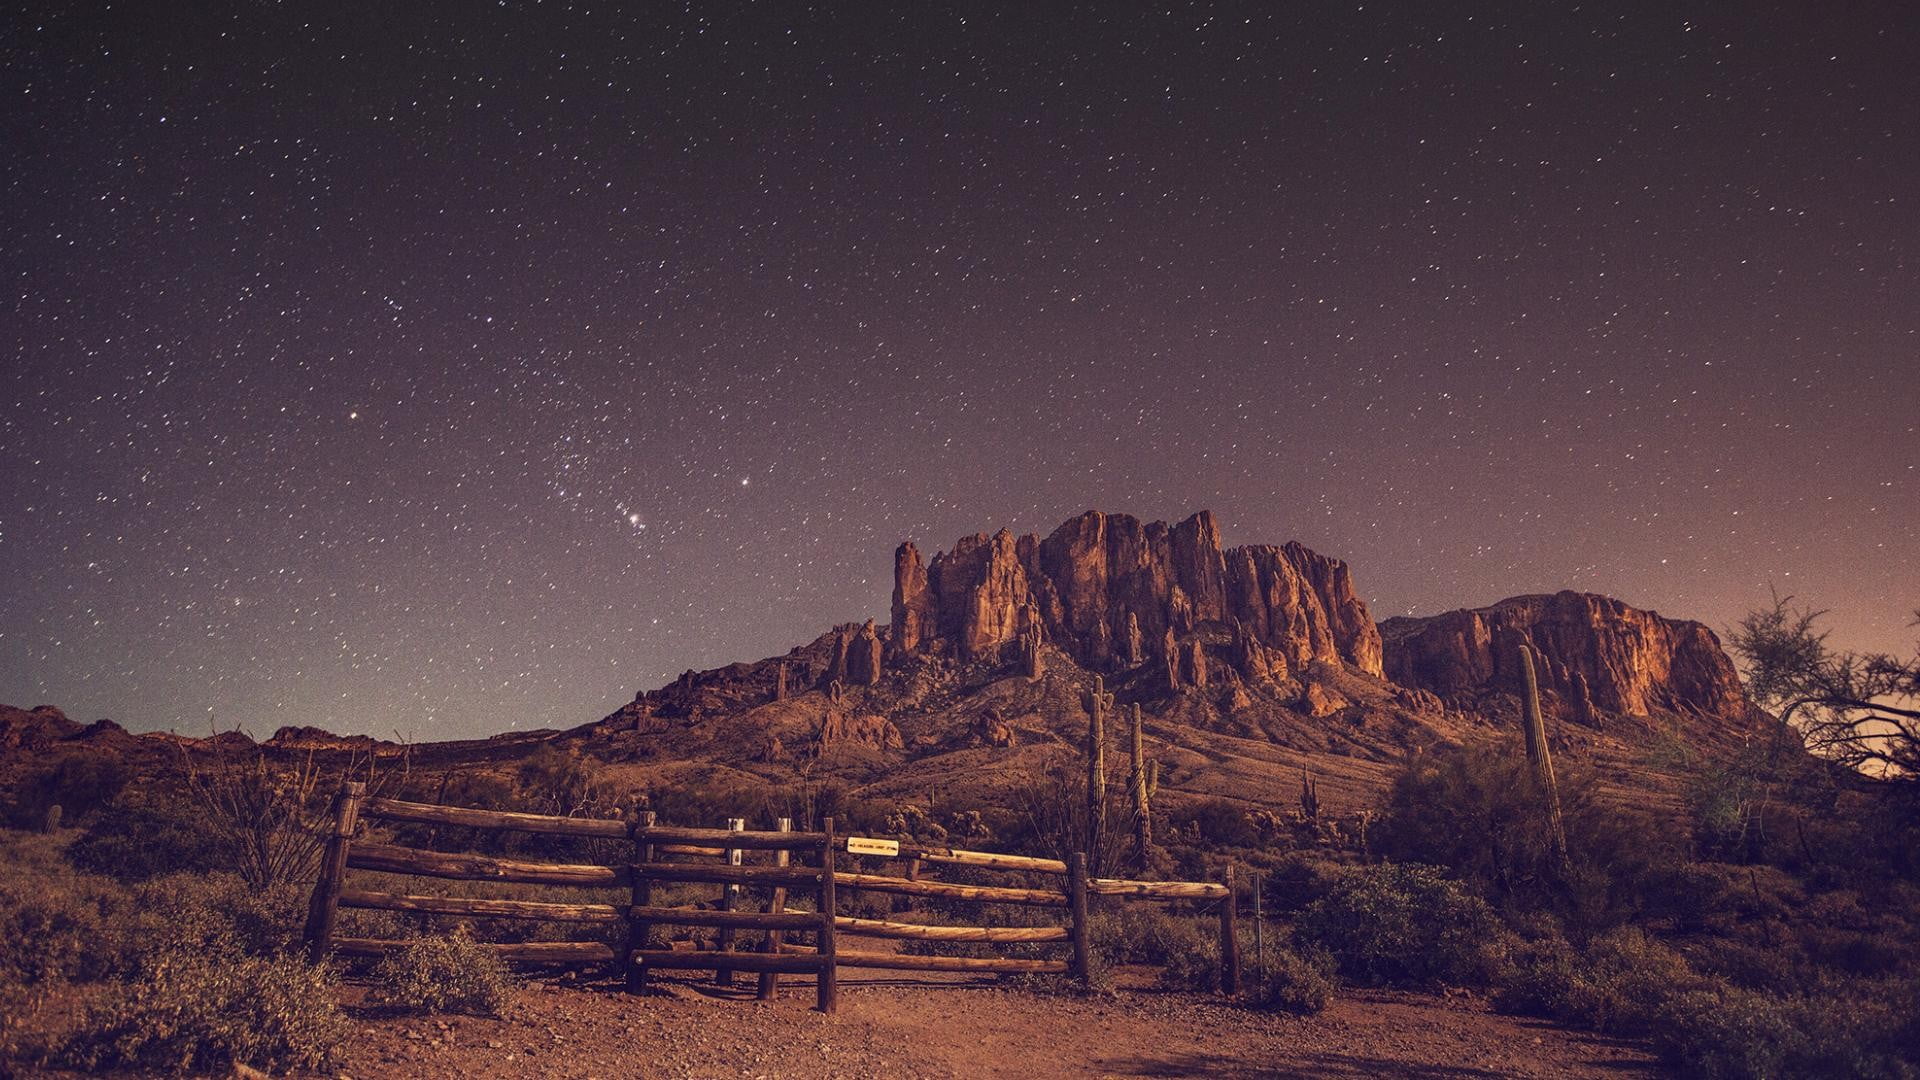 brown hill, desert, night, stars, rock, landscape, star - space